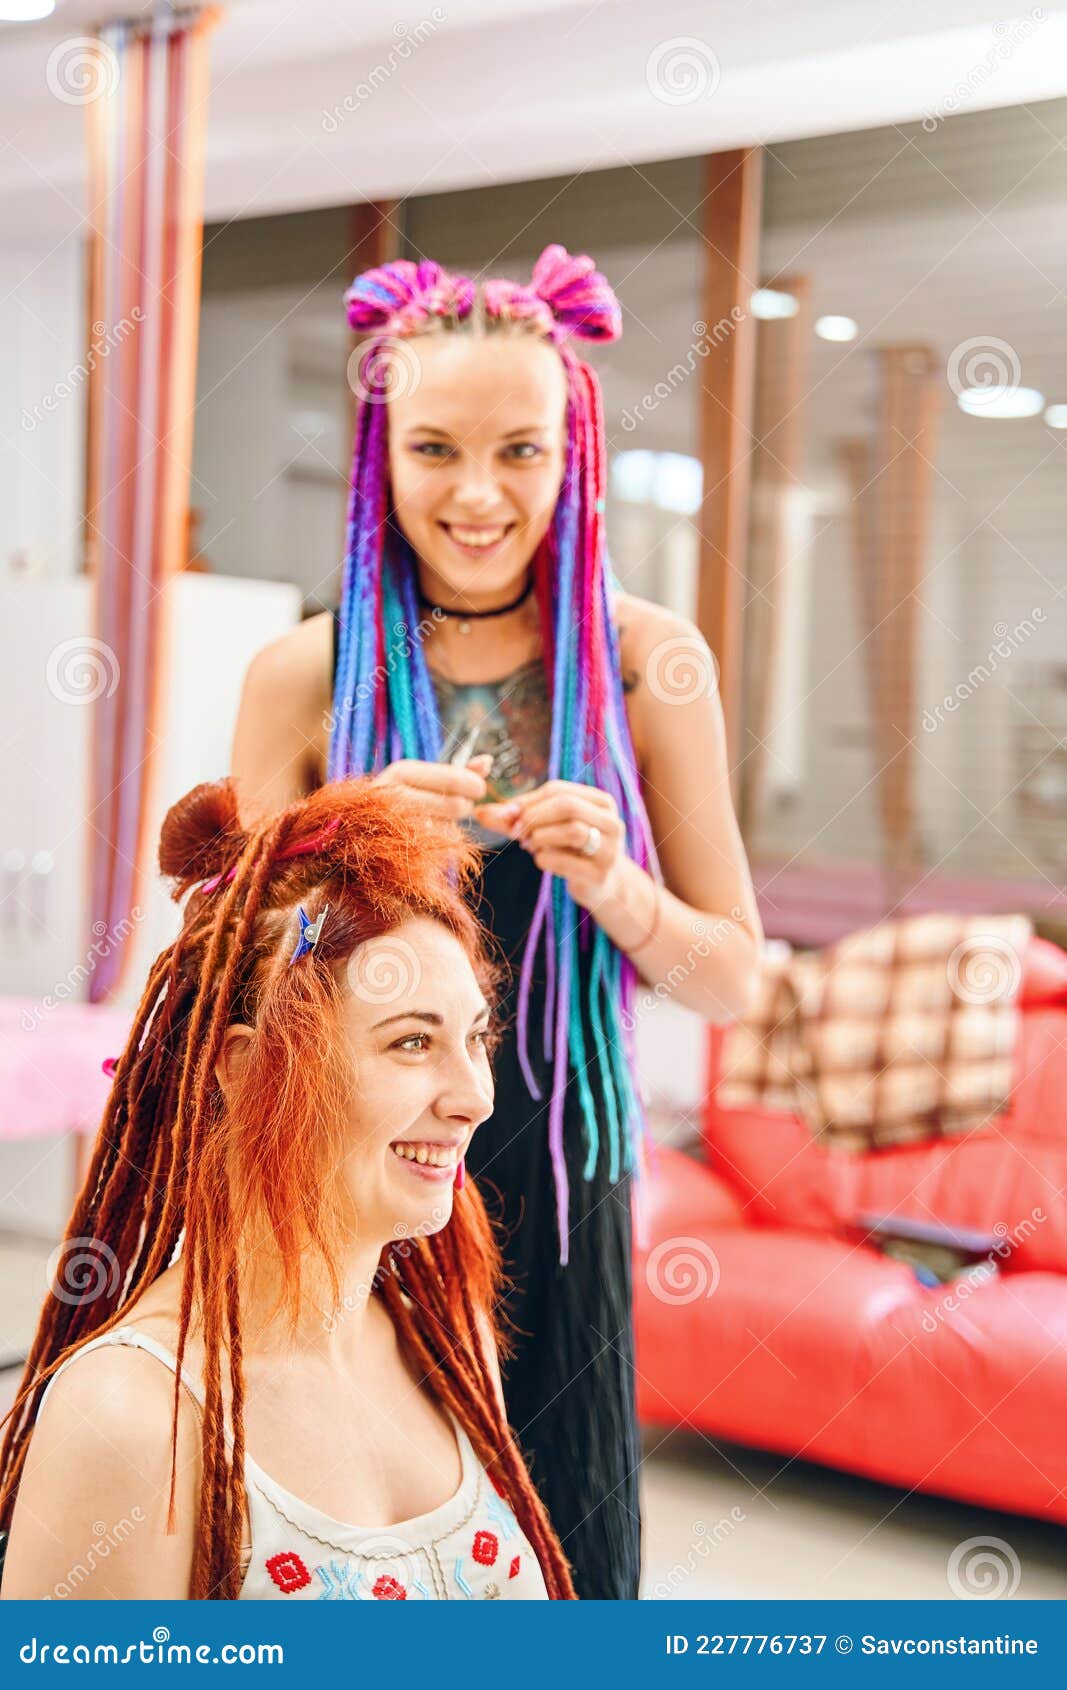 https://thumbs.dreamstime.com/z/hairdresser-colored-afro-braids-weaves-ginger-dreadlocks-happy-girl-woman-smile-weaving-process-kanekalon-hippie-boho-227776737.jpg